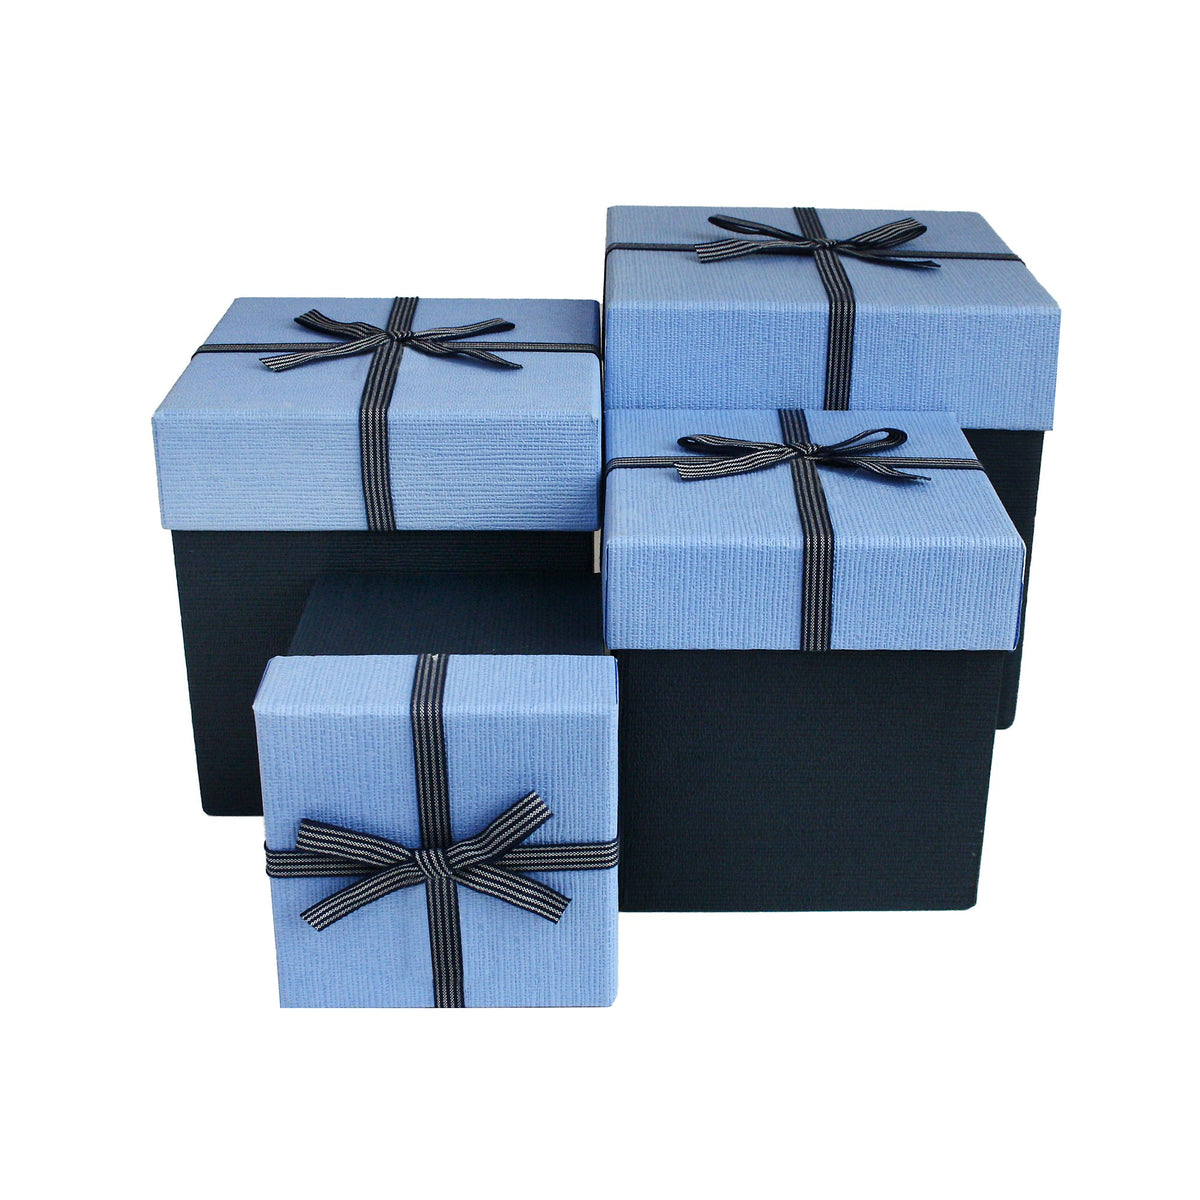 Elegant Dark Blue Gift Boxes - Set of 4